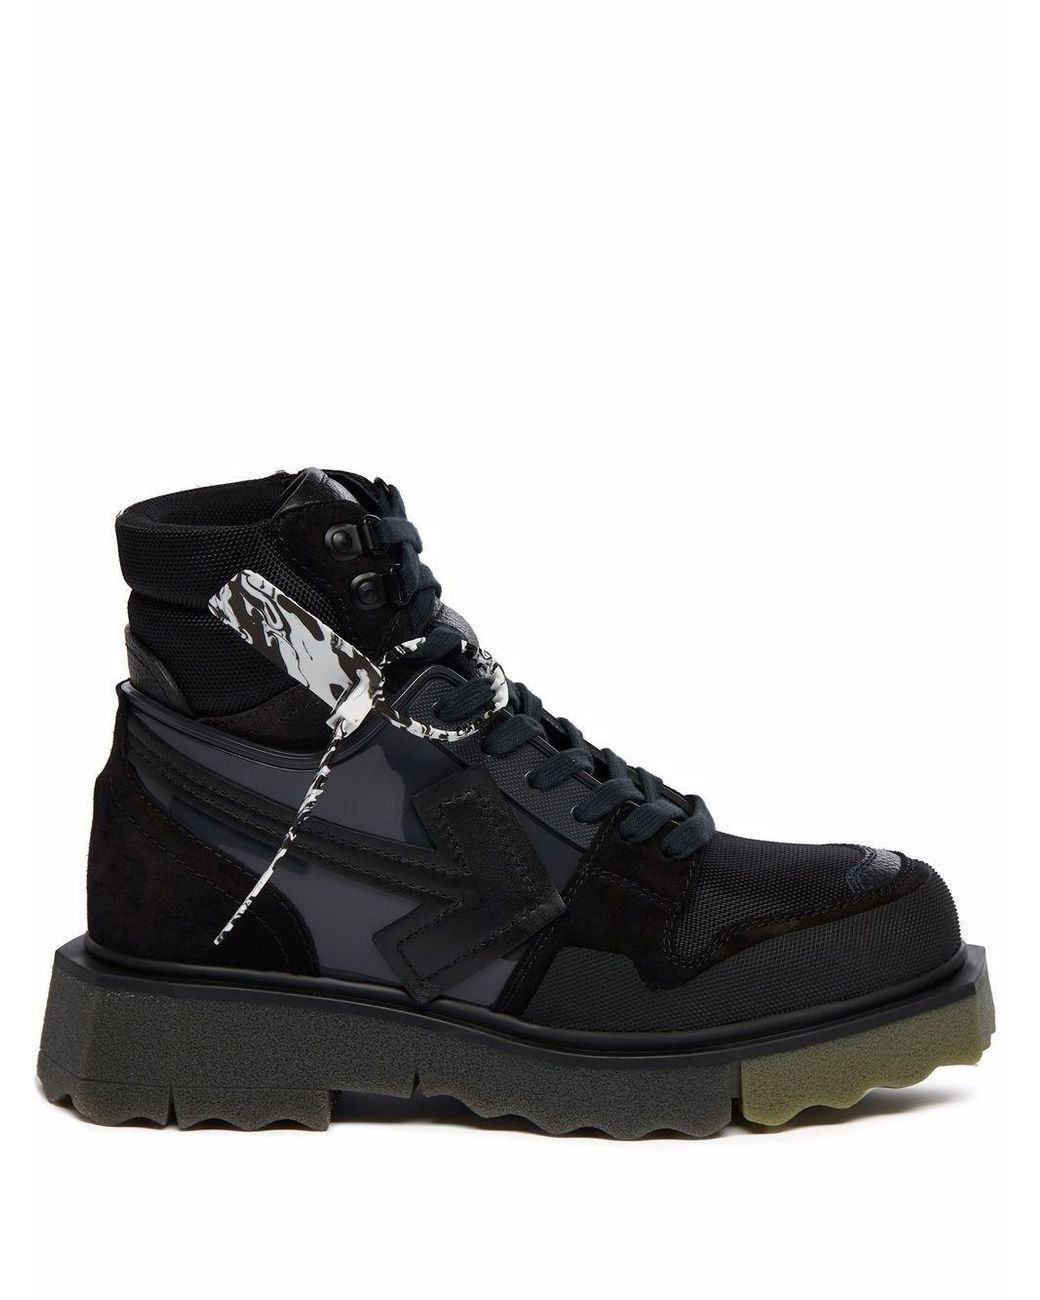 Off-White c/o Virgil Abloh Arrow Motif Hiking Sneaker Boots in Black